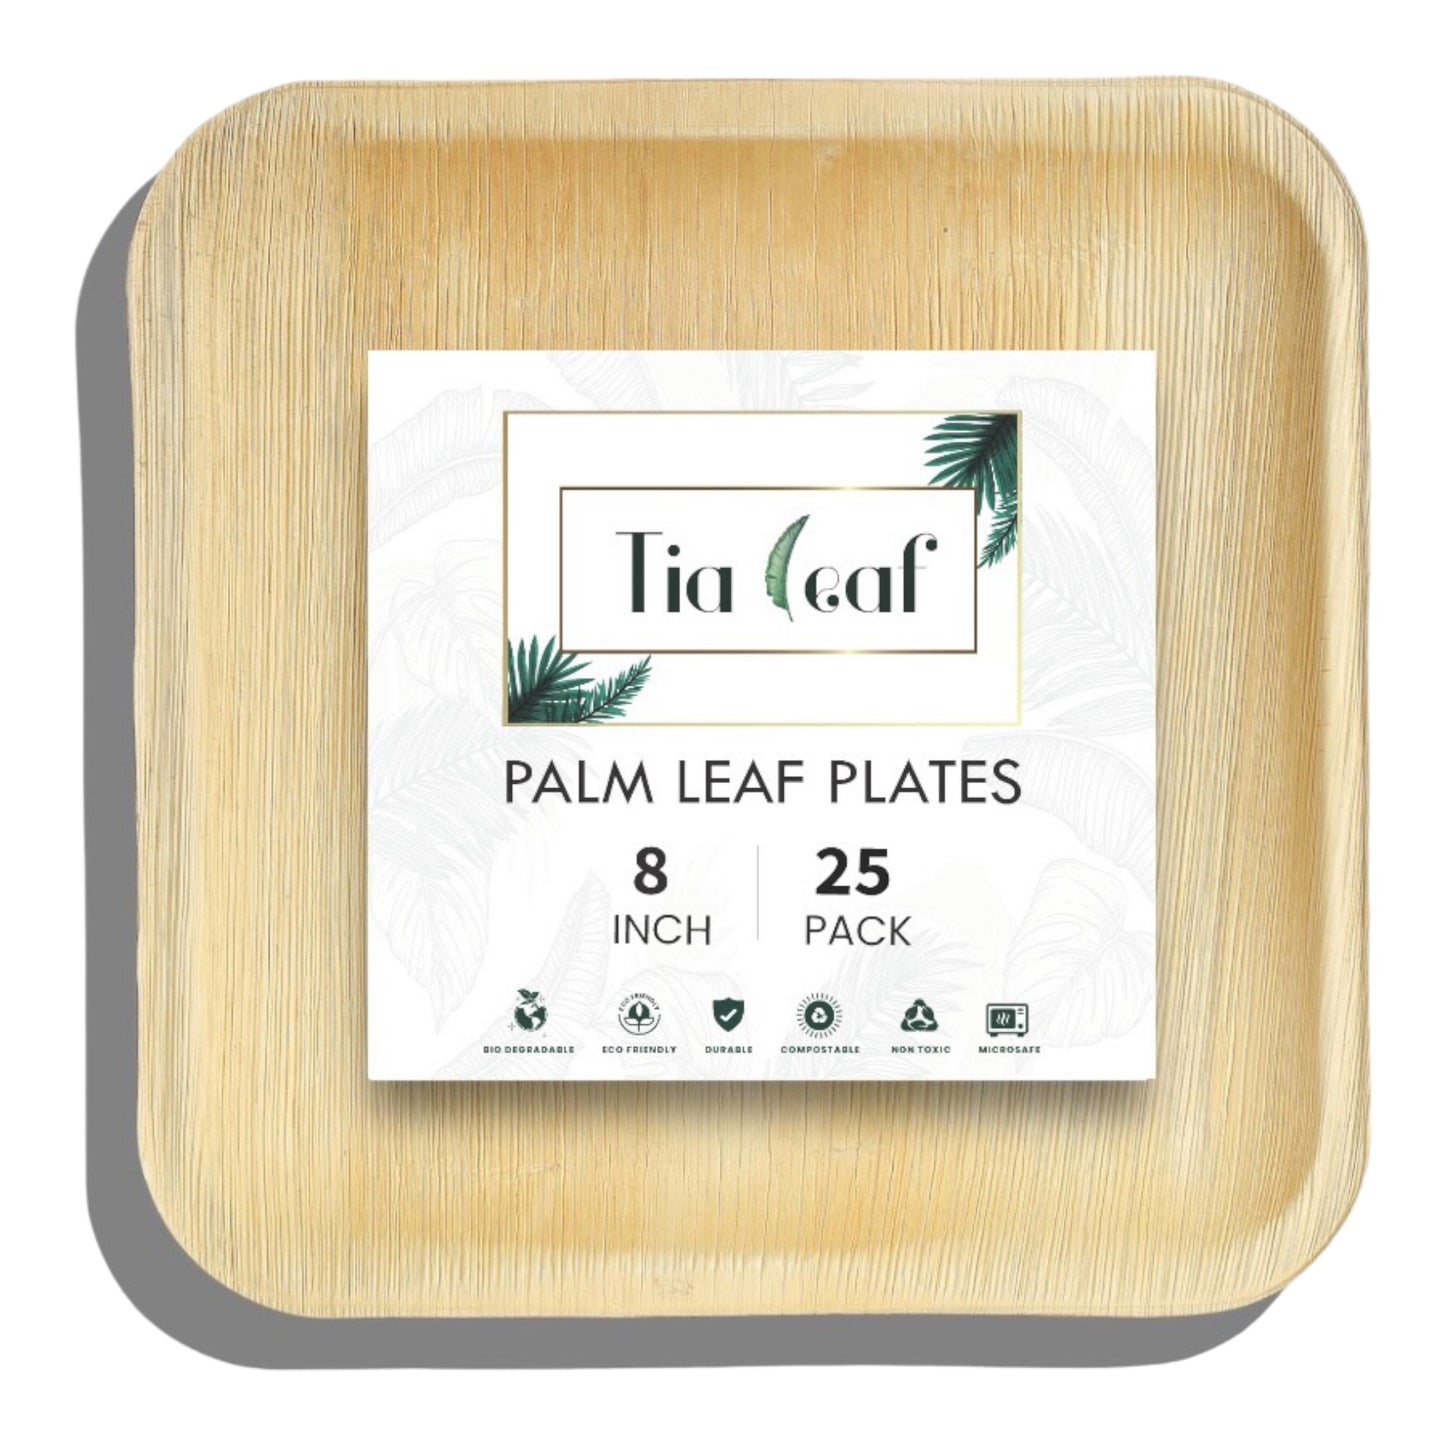 8" Square Palm Leaf Plates